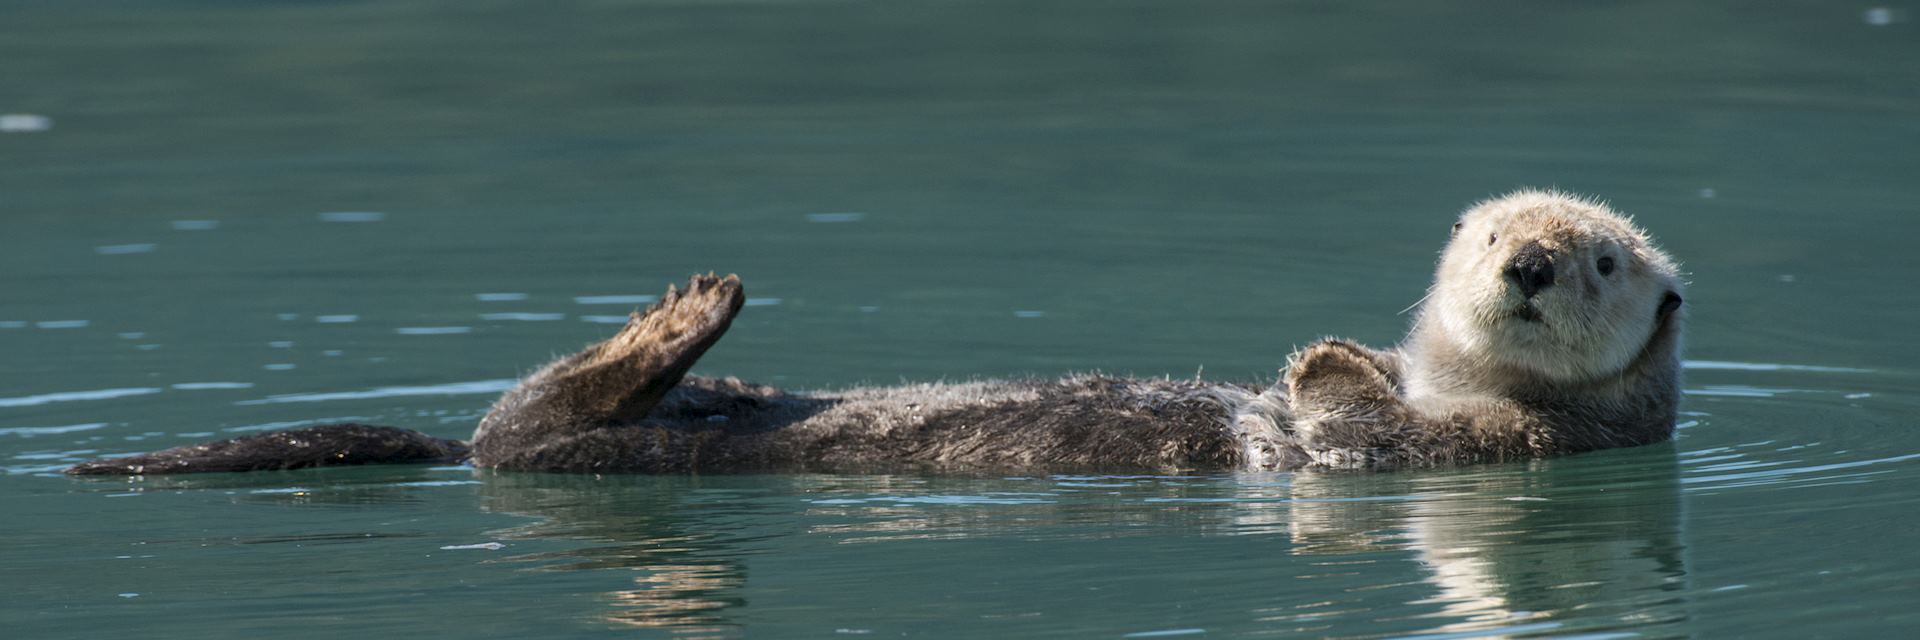 Otter in Prince William Sound